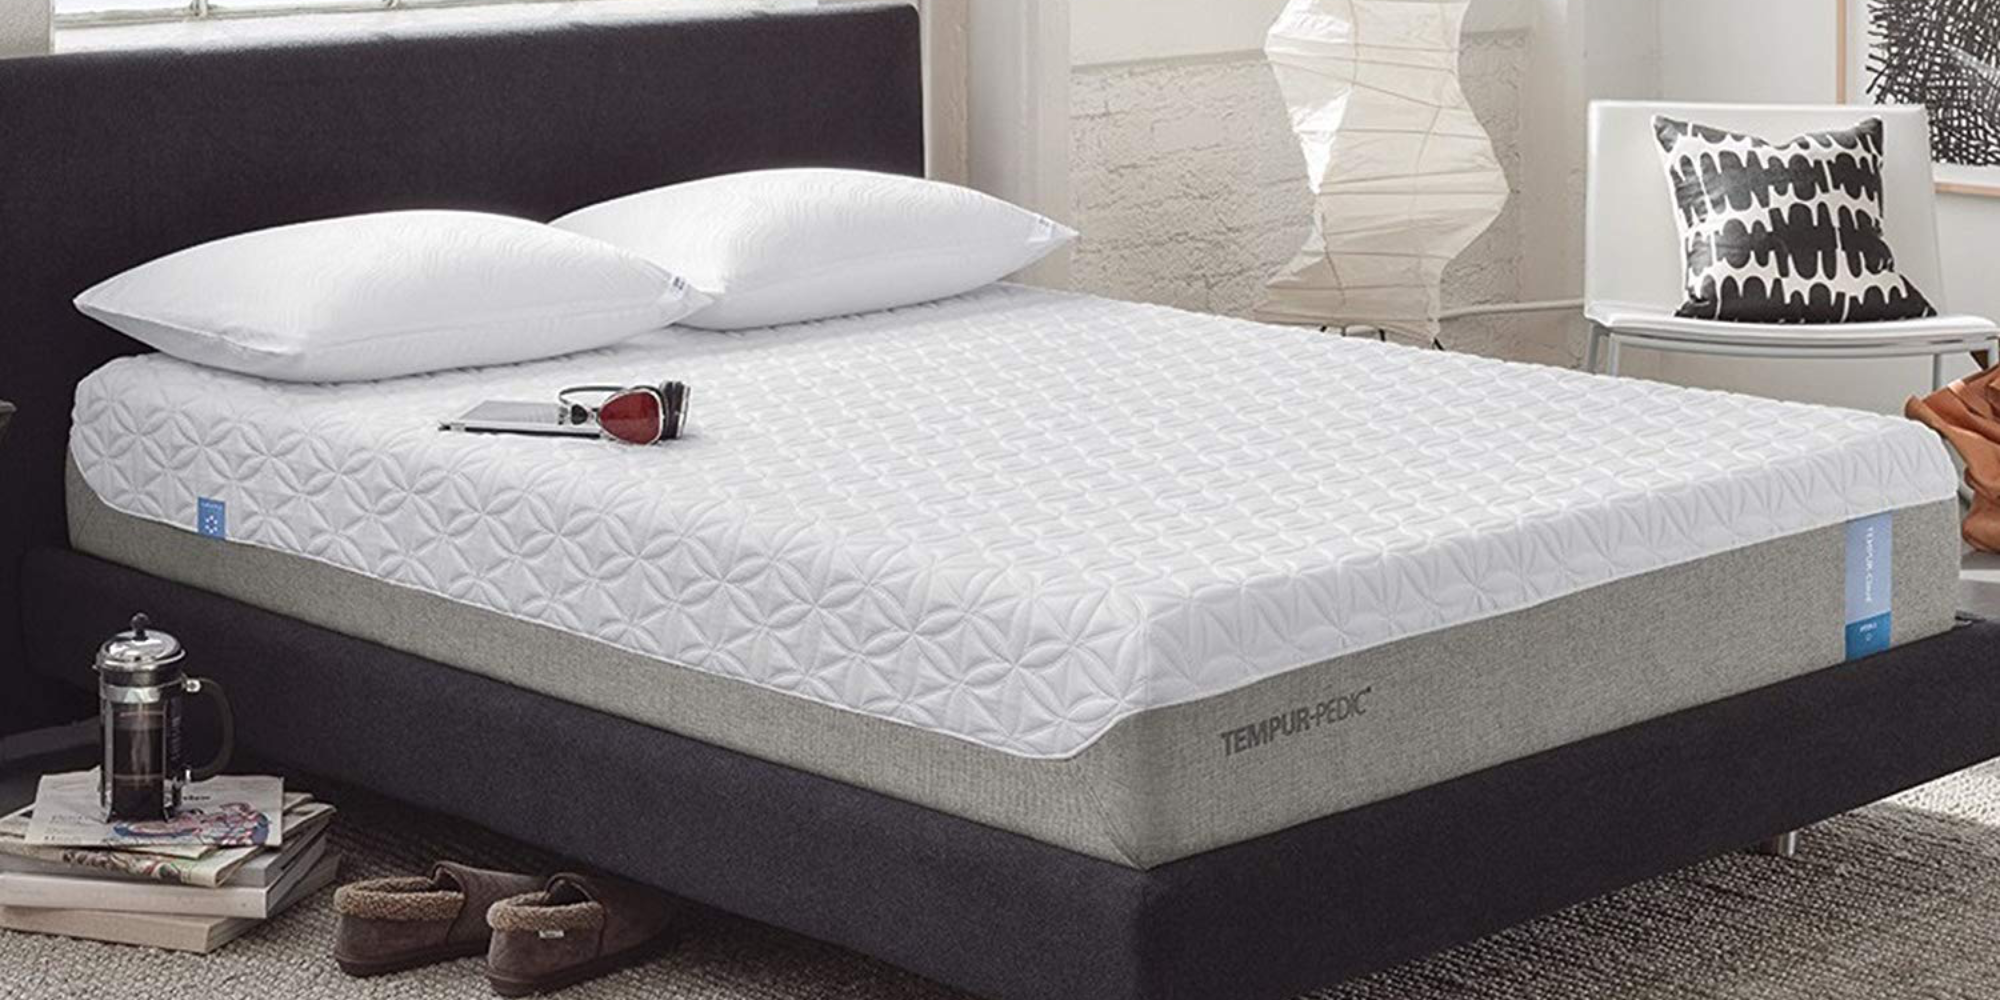 tempur cloud prima mattress reviews